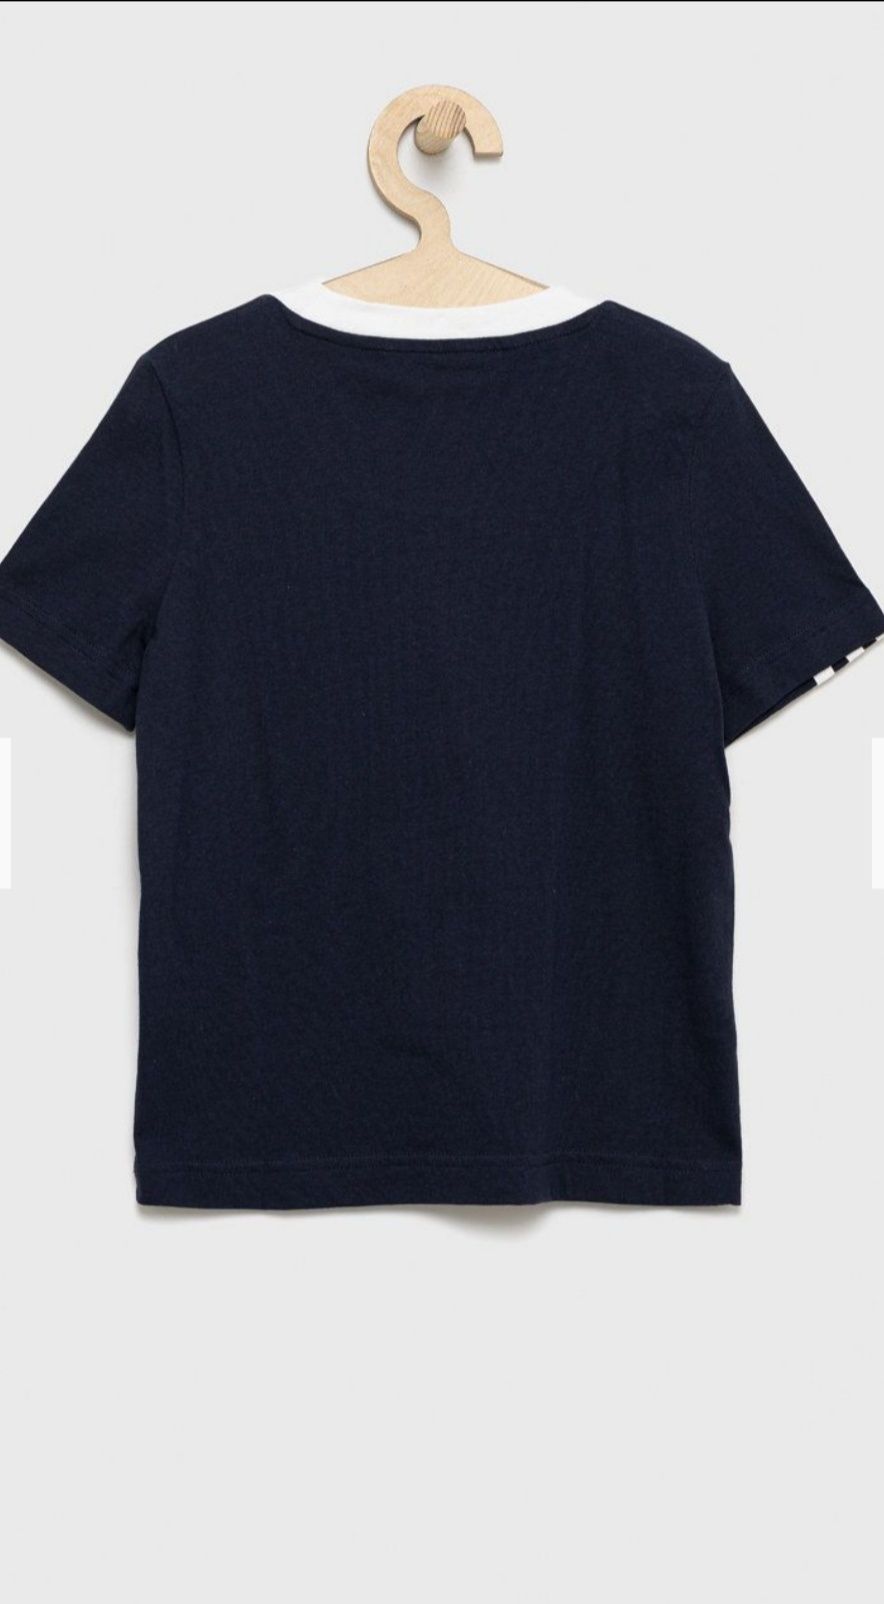 SarBut Adidas koszulka dziecięca rozmiar 140 cm